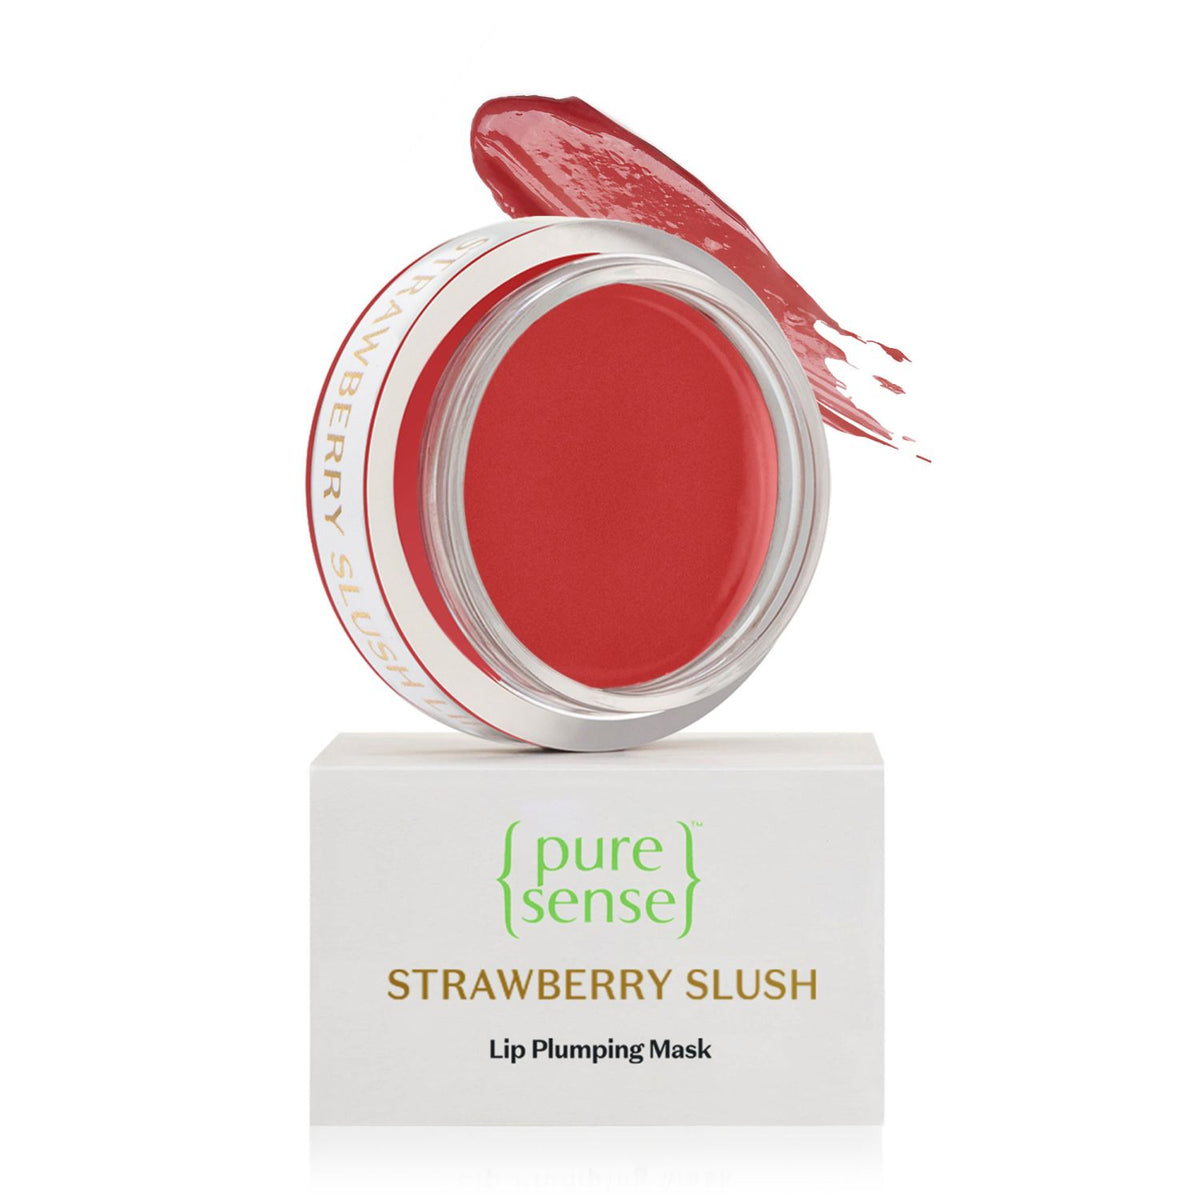 Strawberry Slush Lip Plumping Mask | From the makers of Parachute Advansed | 5ml - PureSense